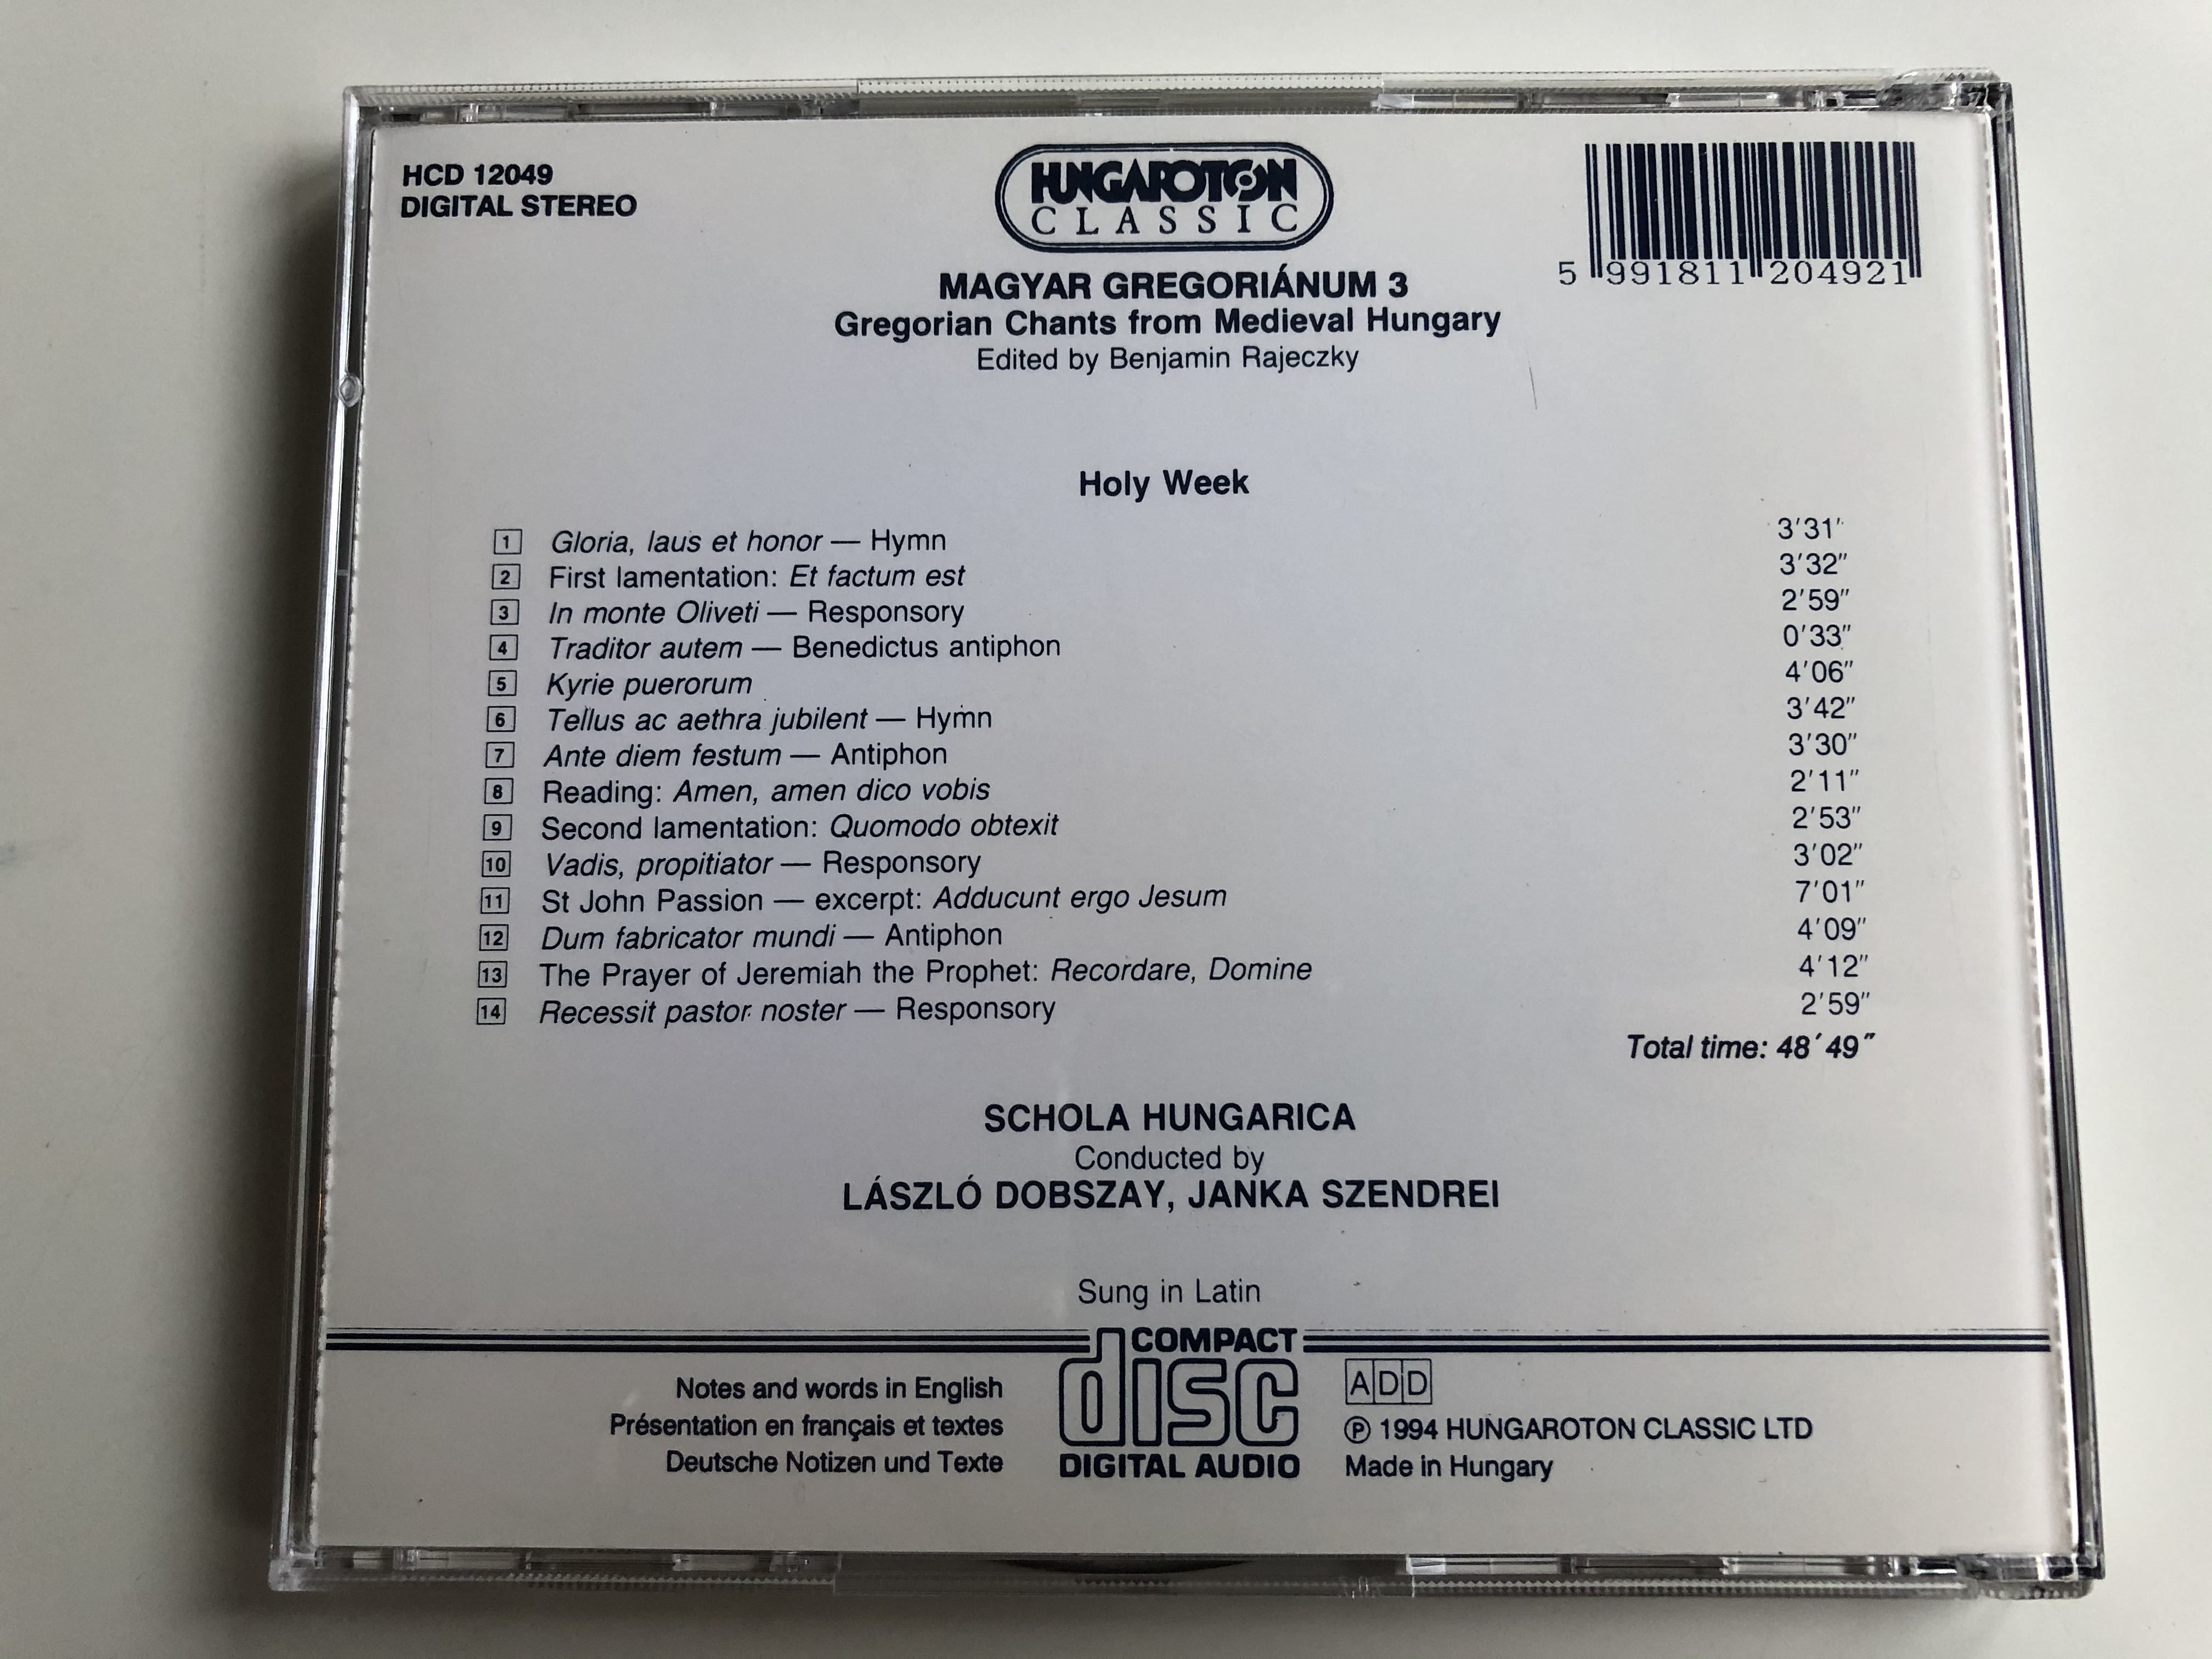 magyar-gregori-num-3-gregorian-chants-from-medieval-hungary-holy-week-schola-hungarica-hungaroton-classic-audio-cd-1994-stereo-hcd-12049-13-.jpg